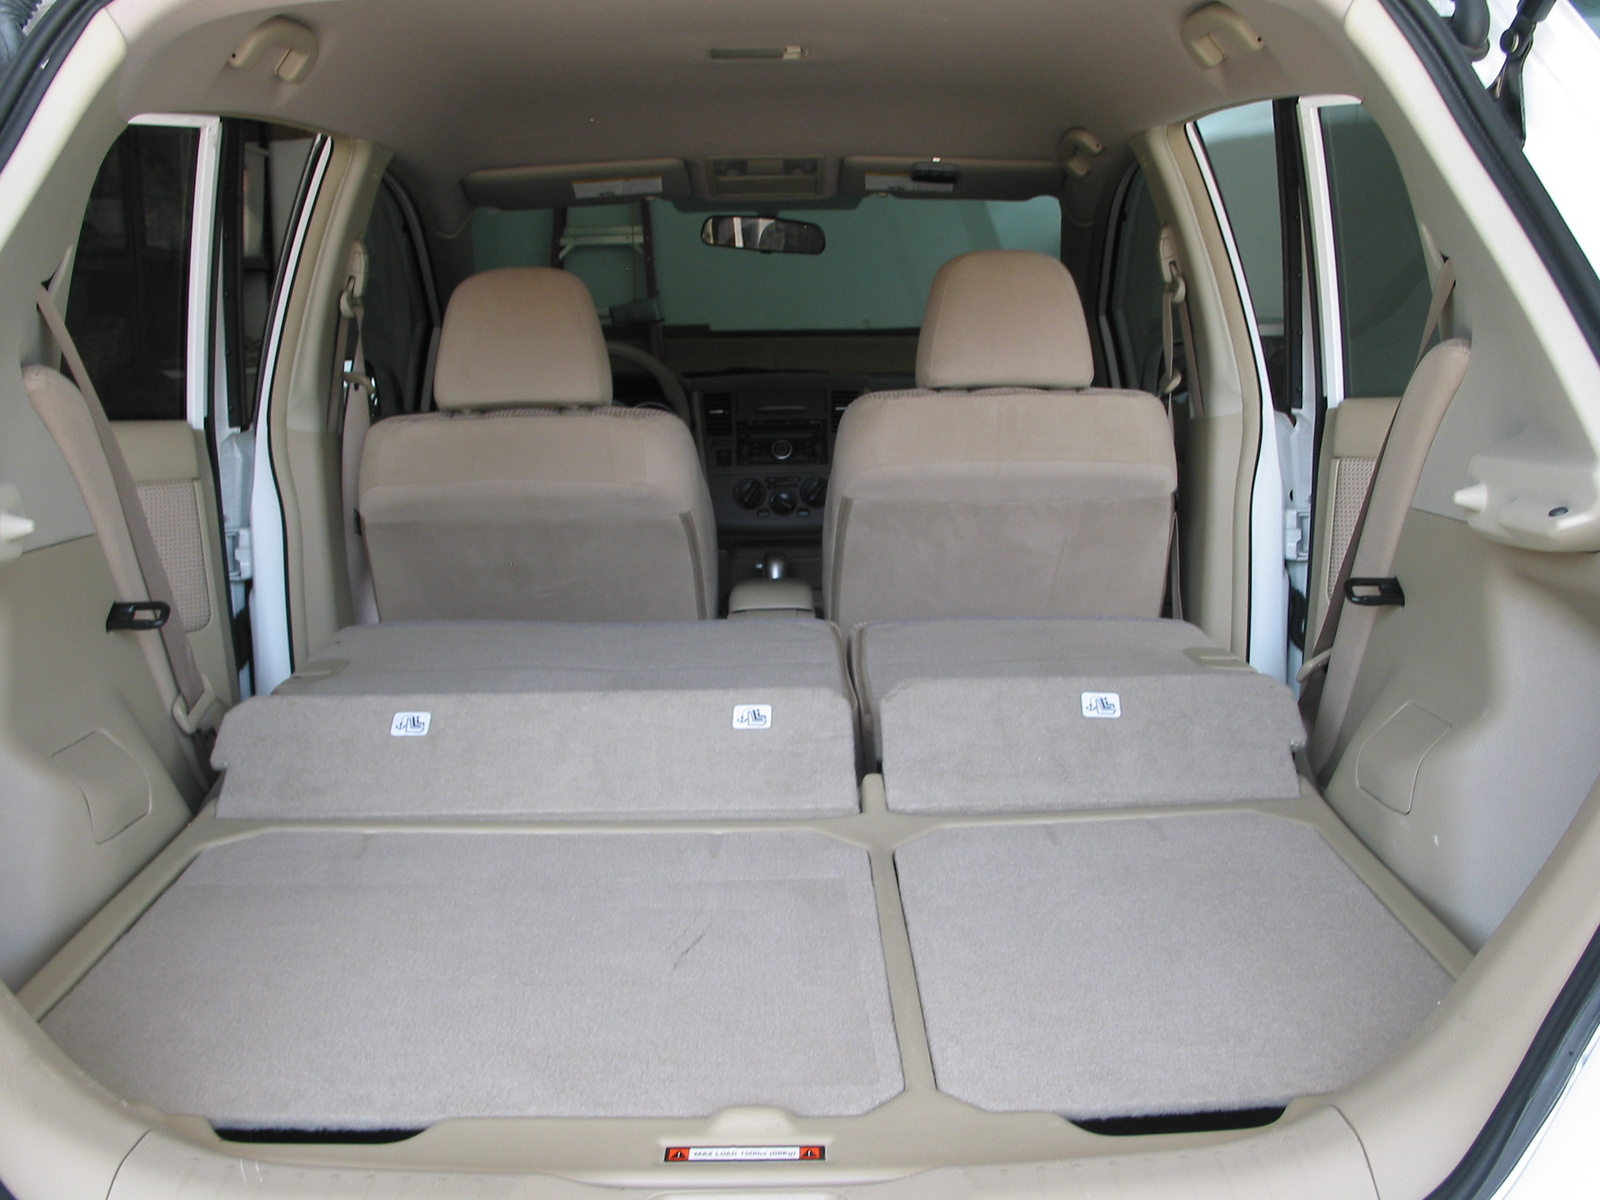 2010 Nissan versa interior dimensions #1